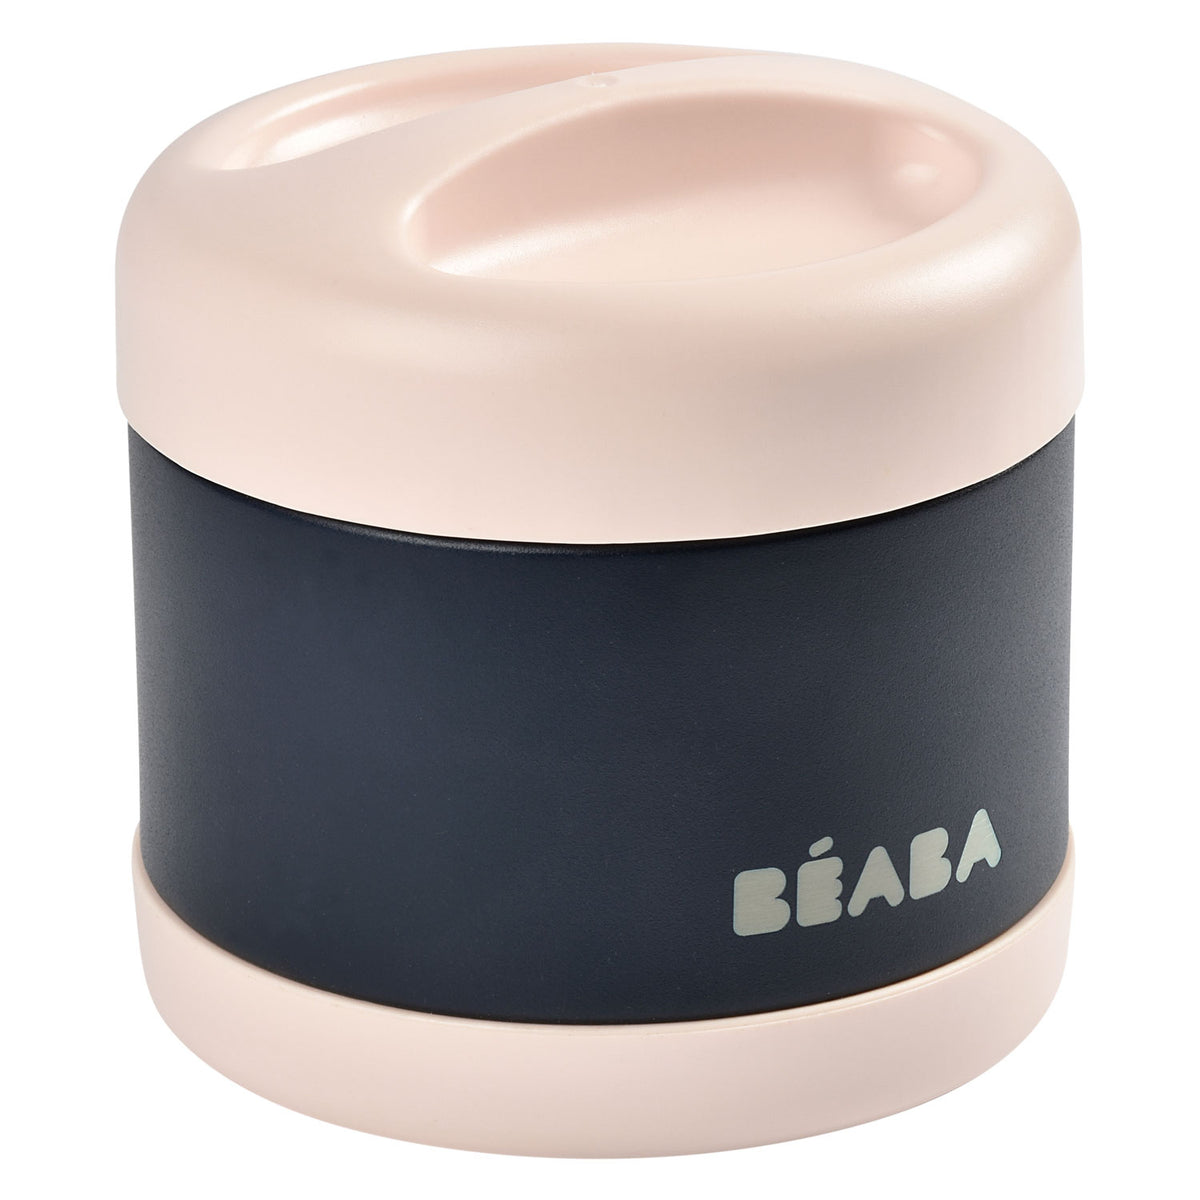 Beaba Thermobehälter aus Edelstahl 500ml hellrosa/nachtblau